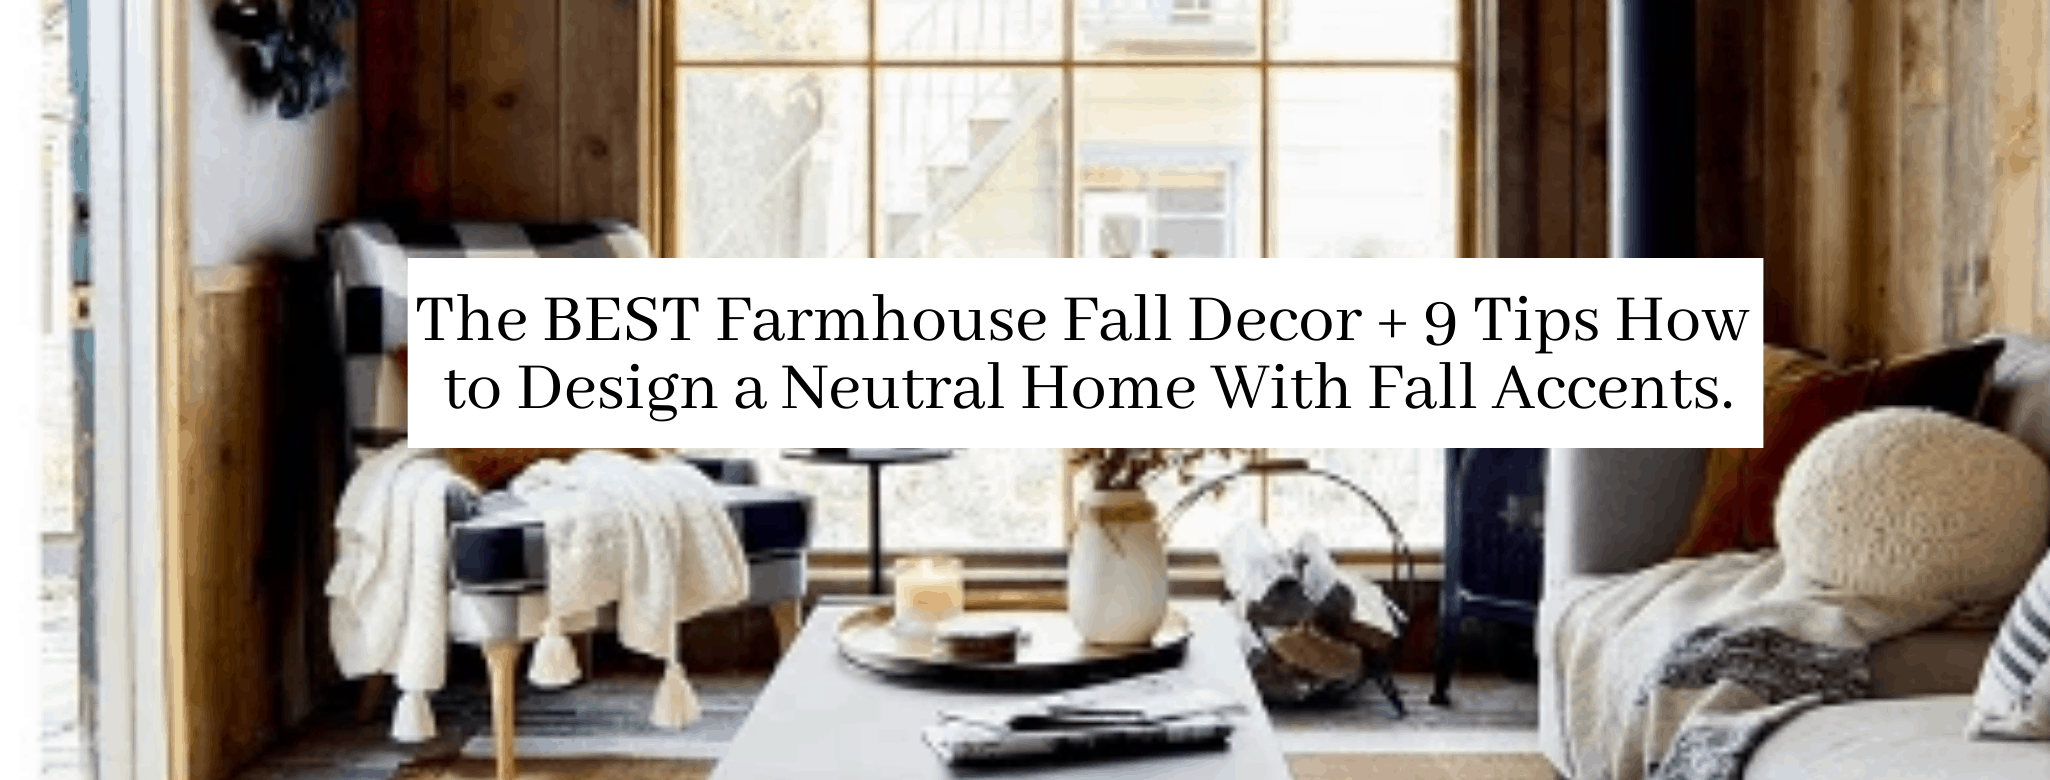 farmhouse fall decor